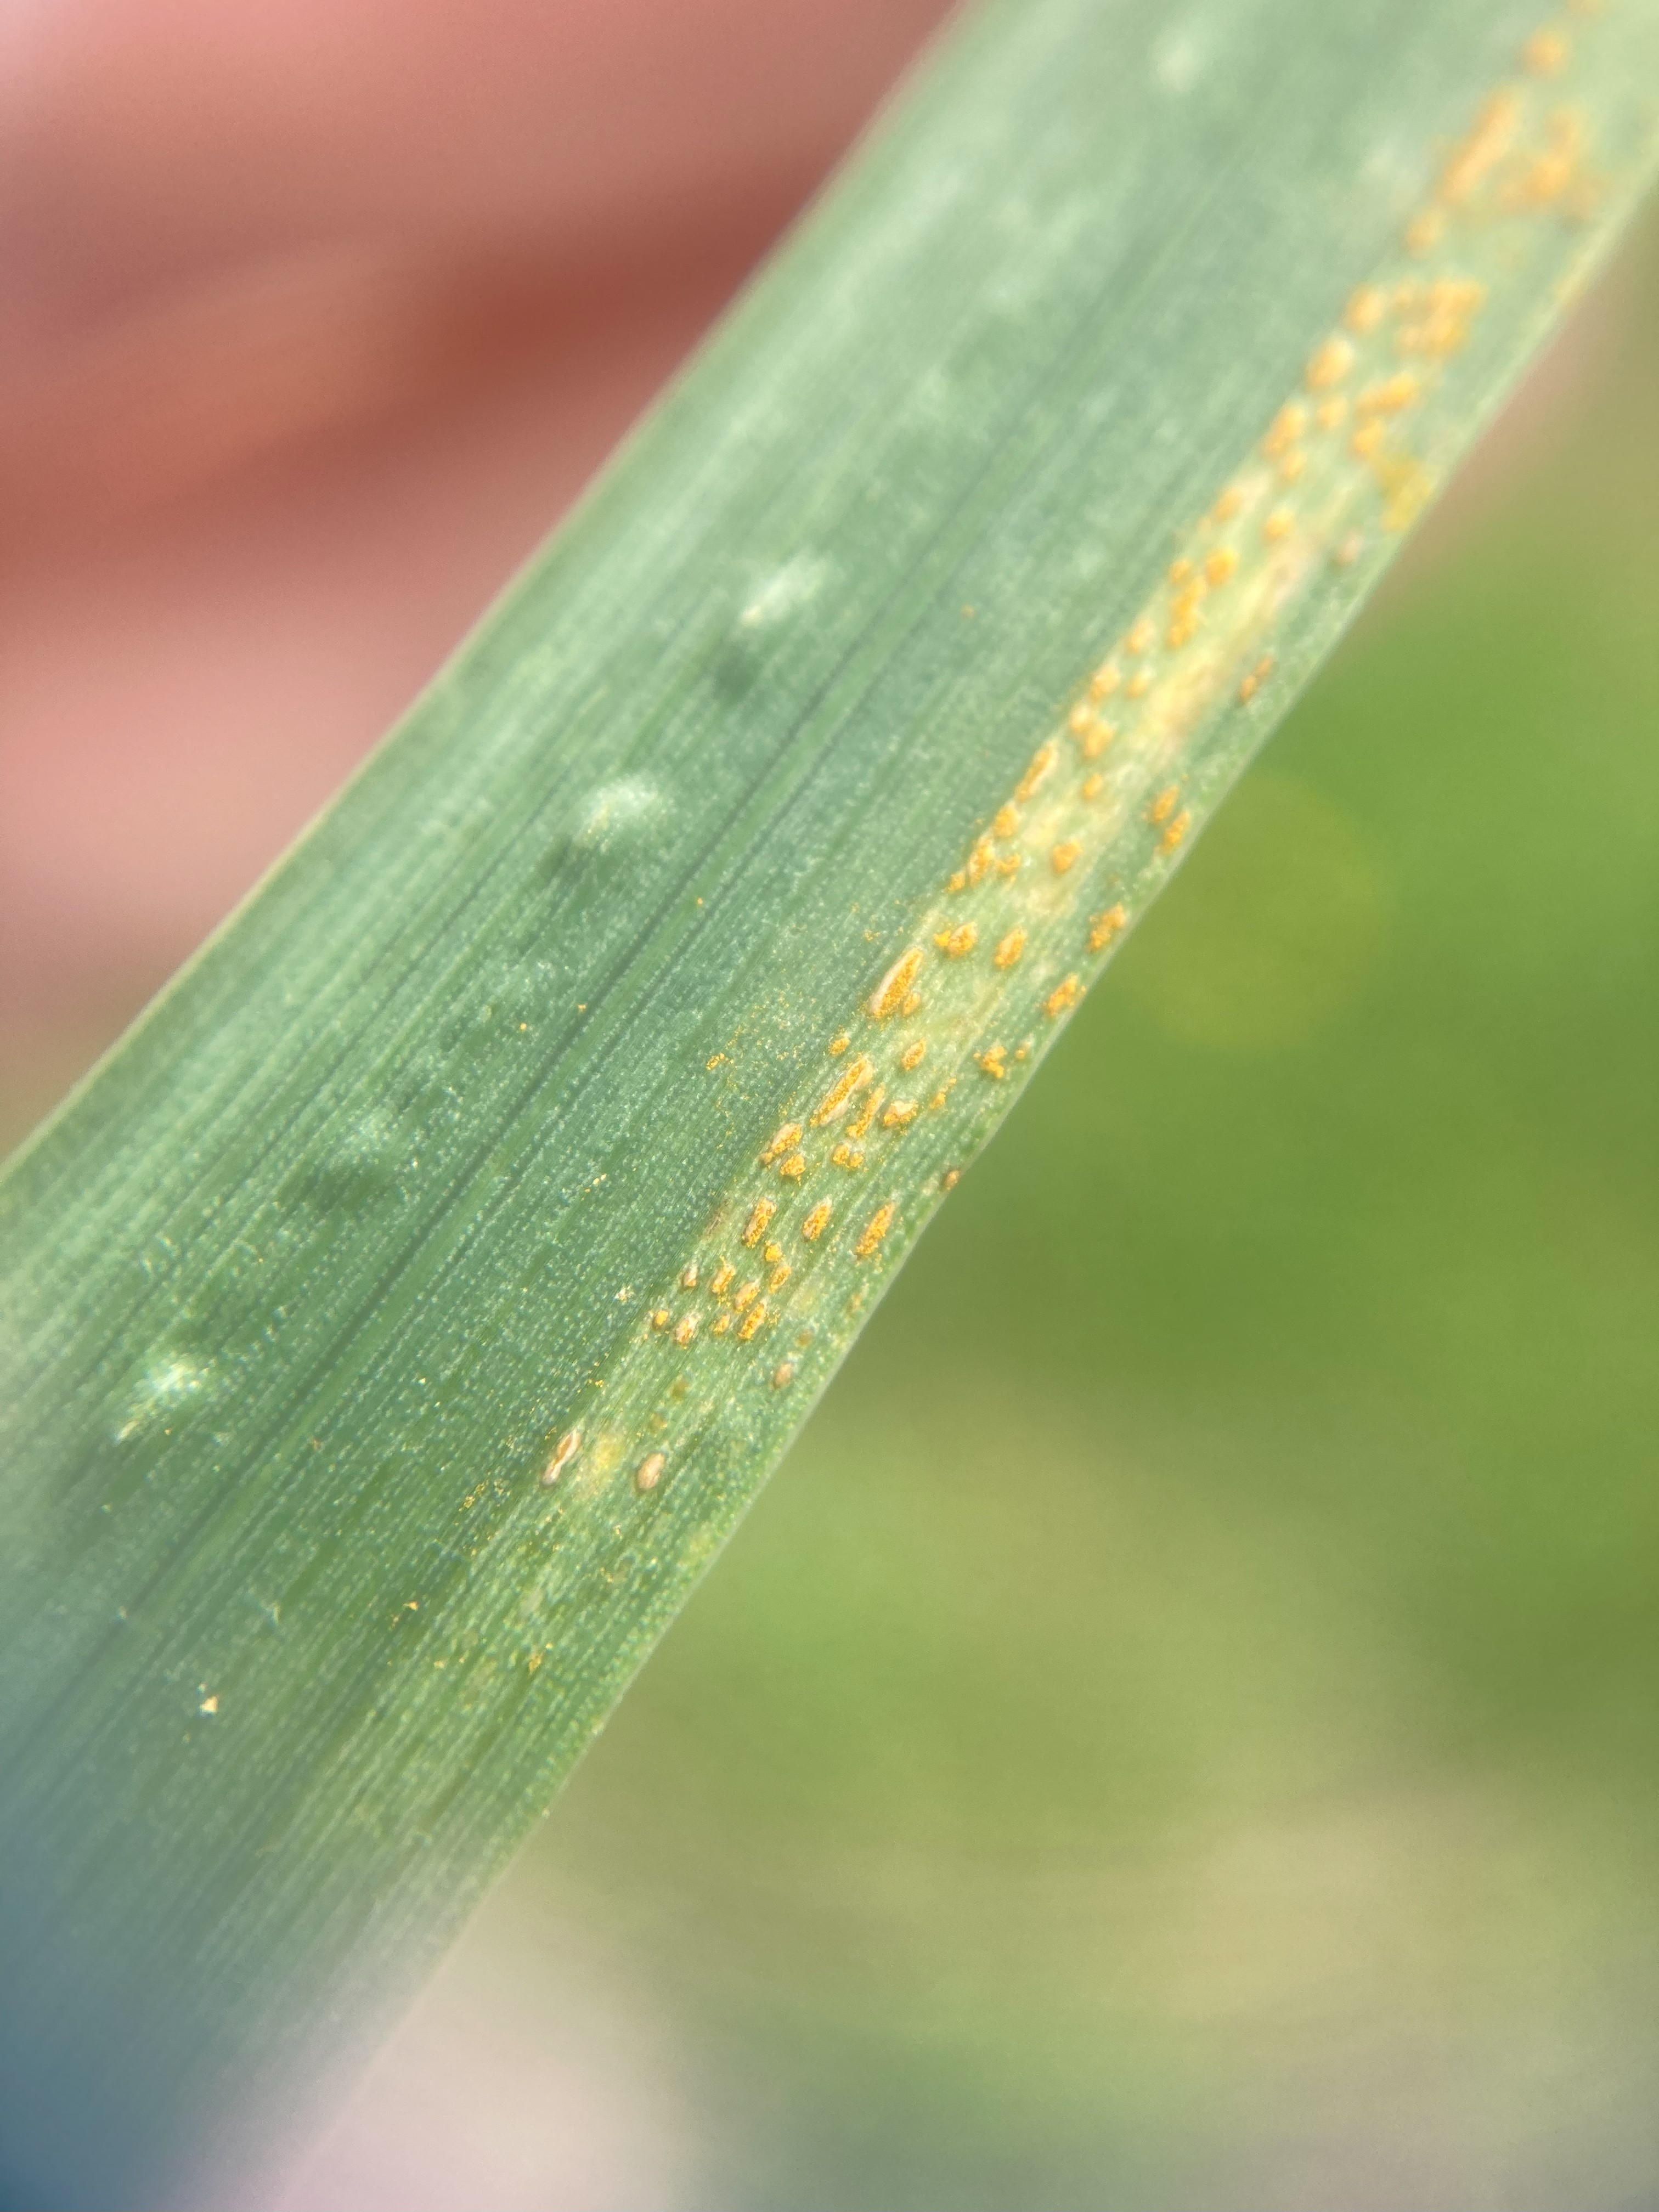 Closeup of rust on wheat leaf.